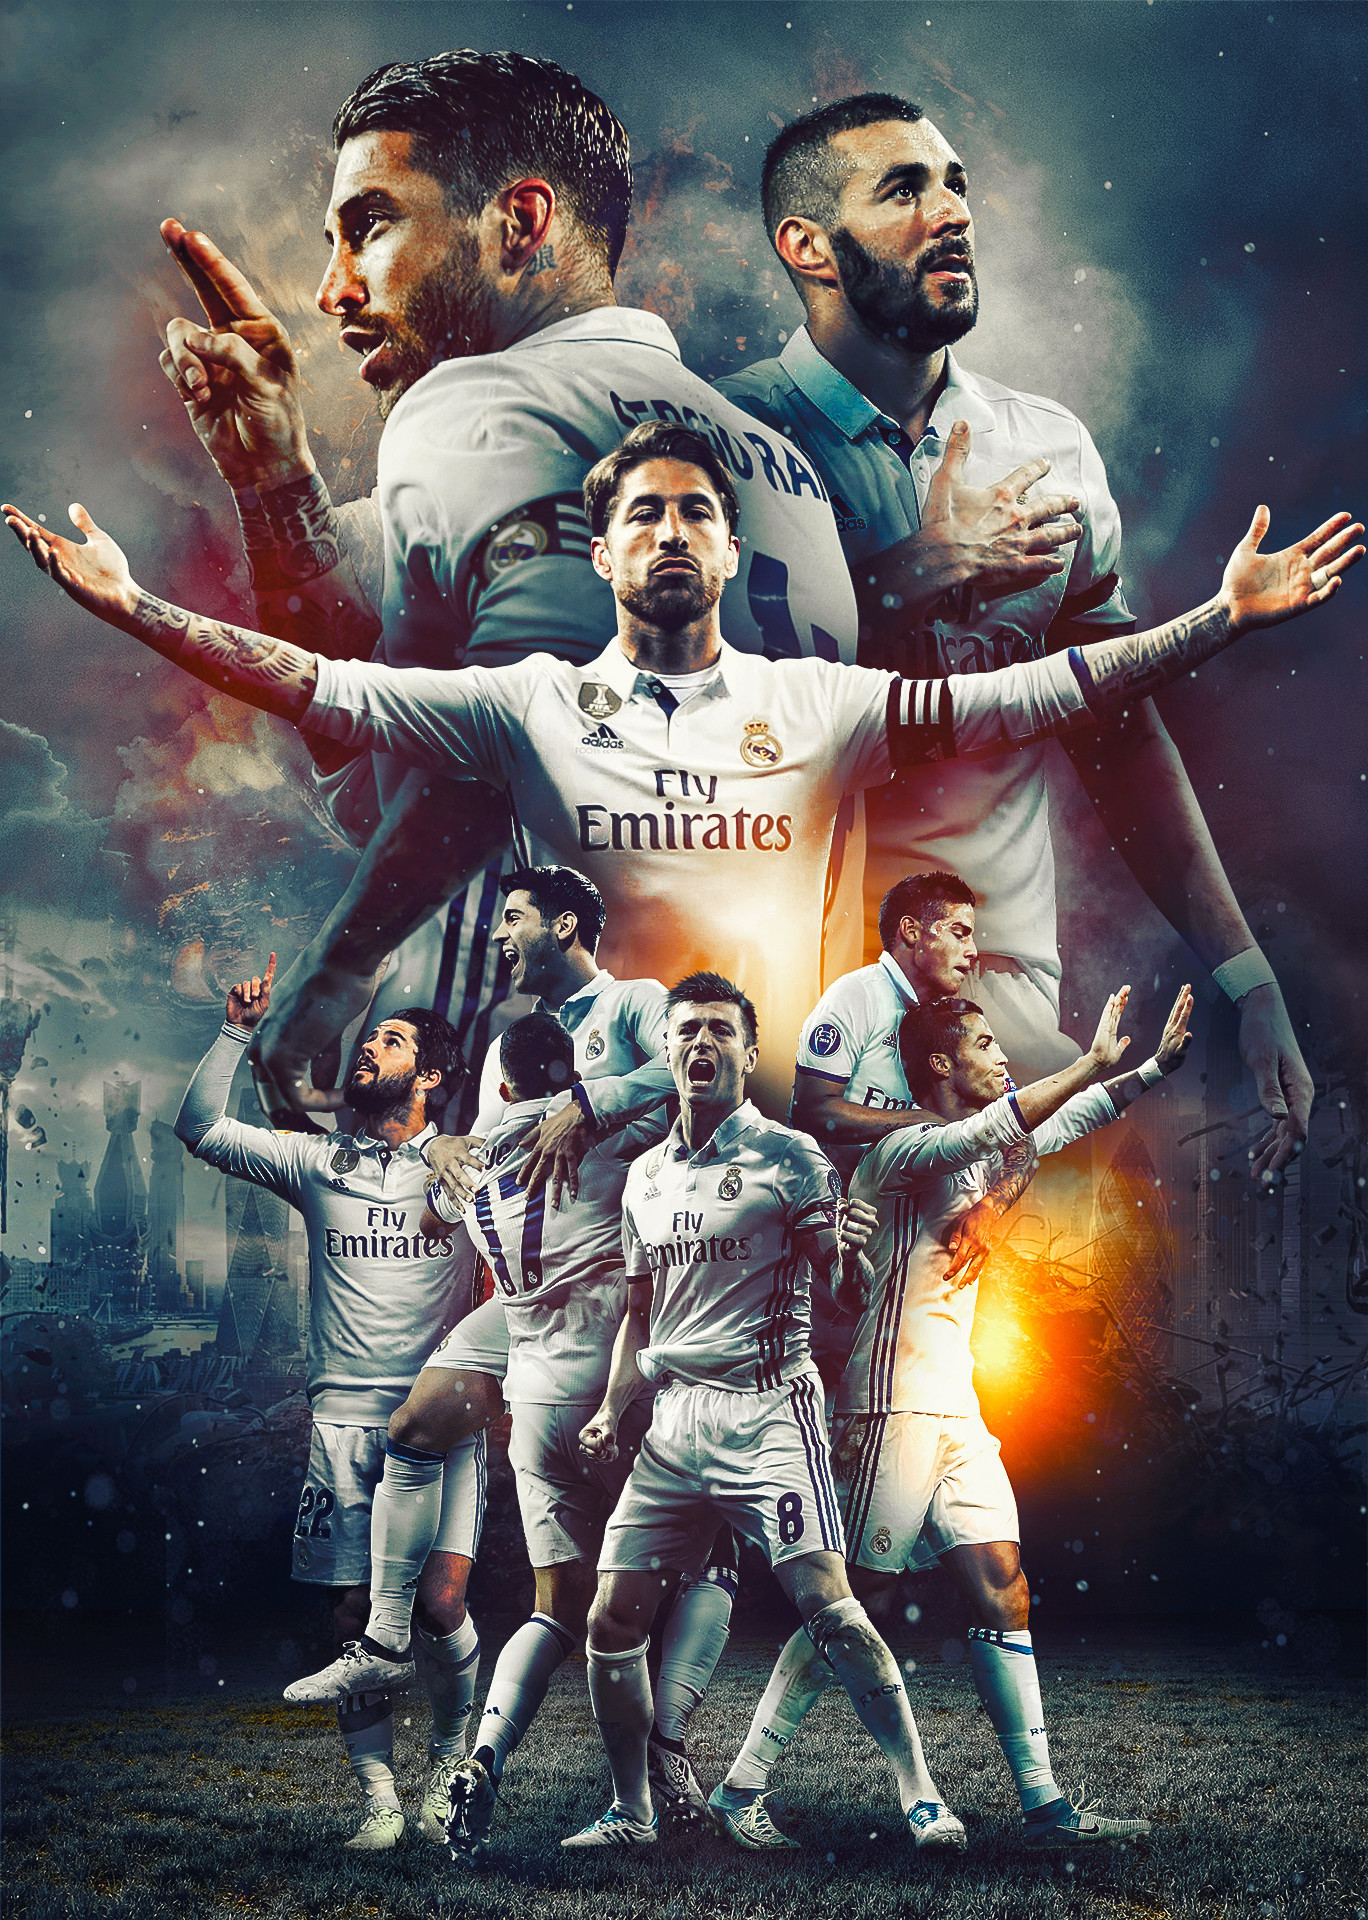 Real Madrid Wal
lpaper Hd Data-src - Real Madrid Wallpaper 2019